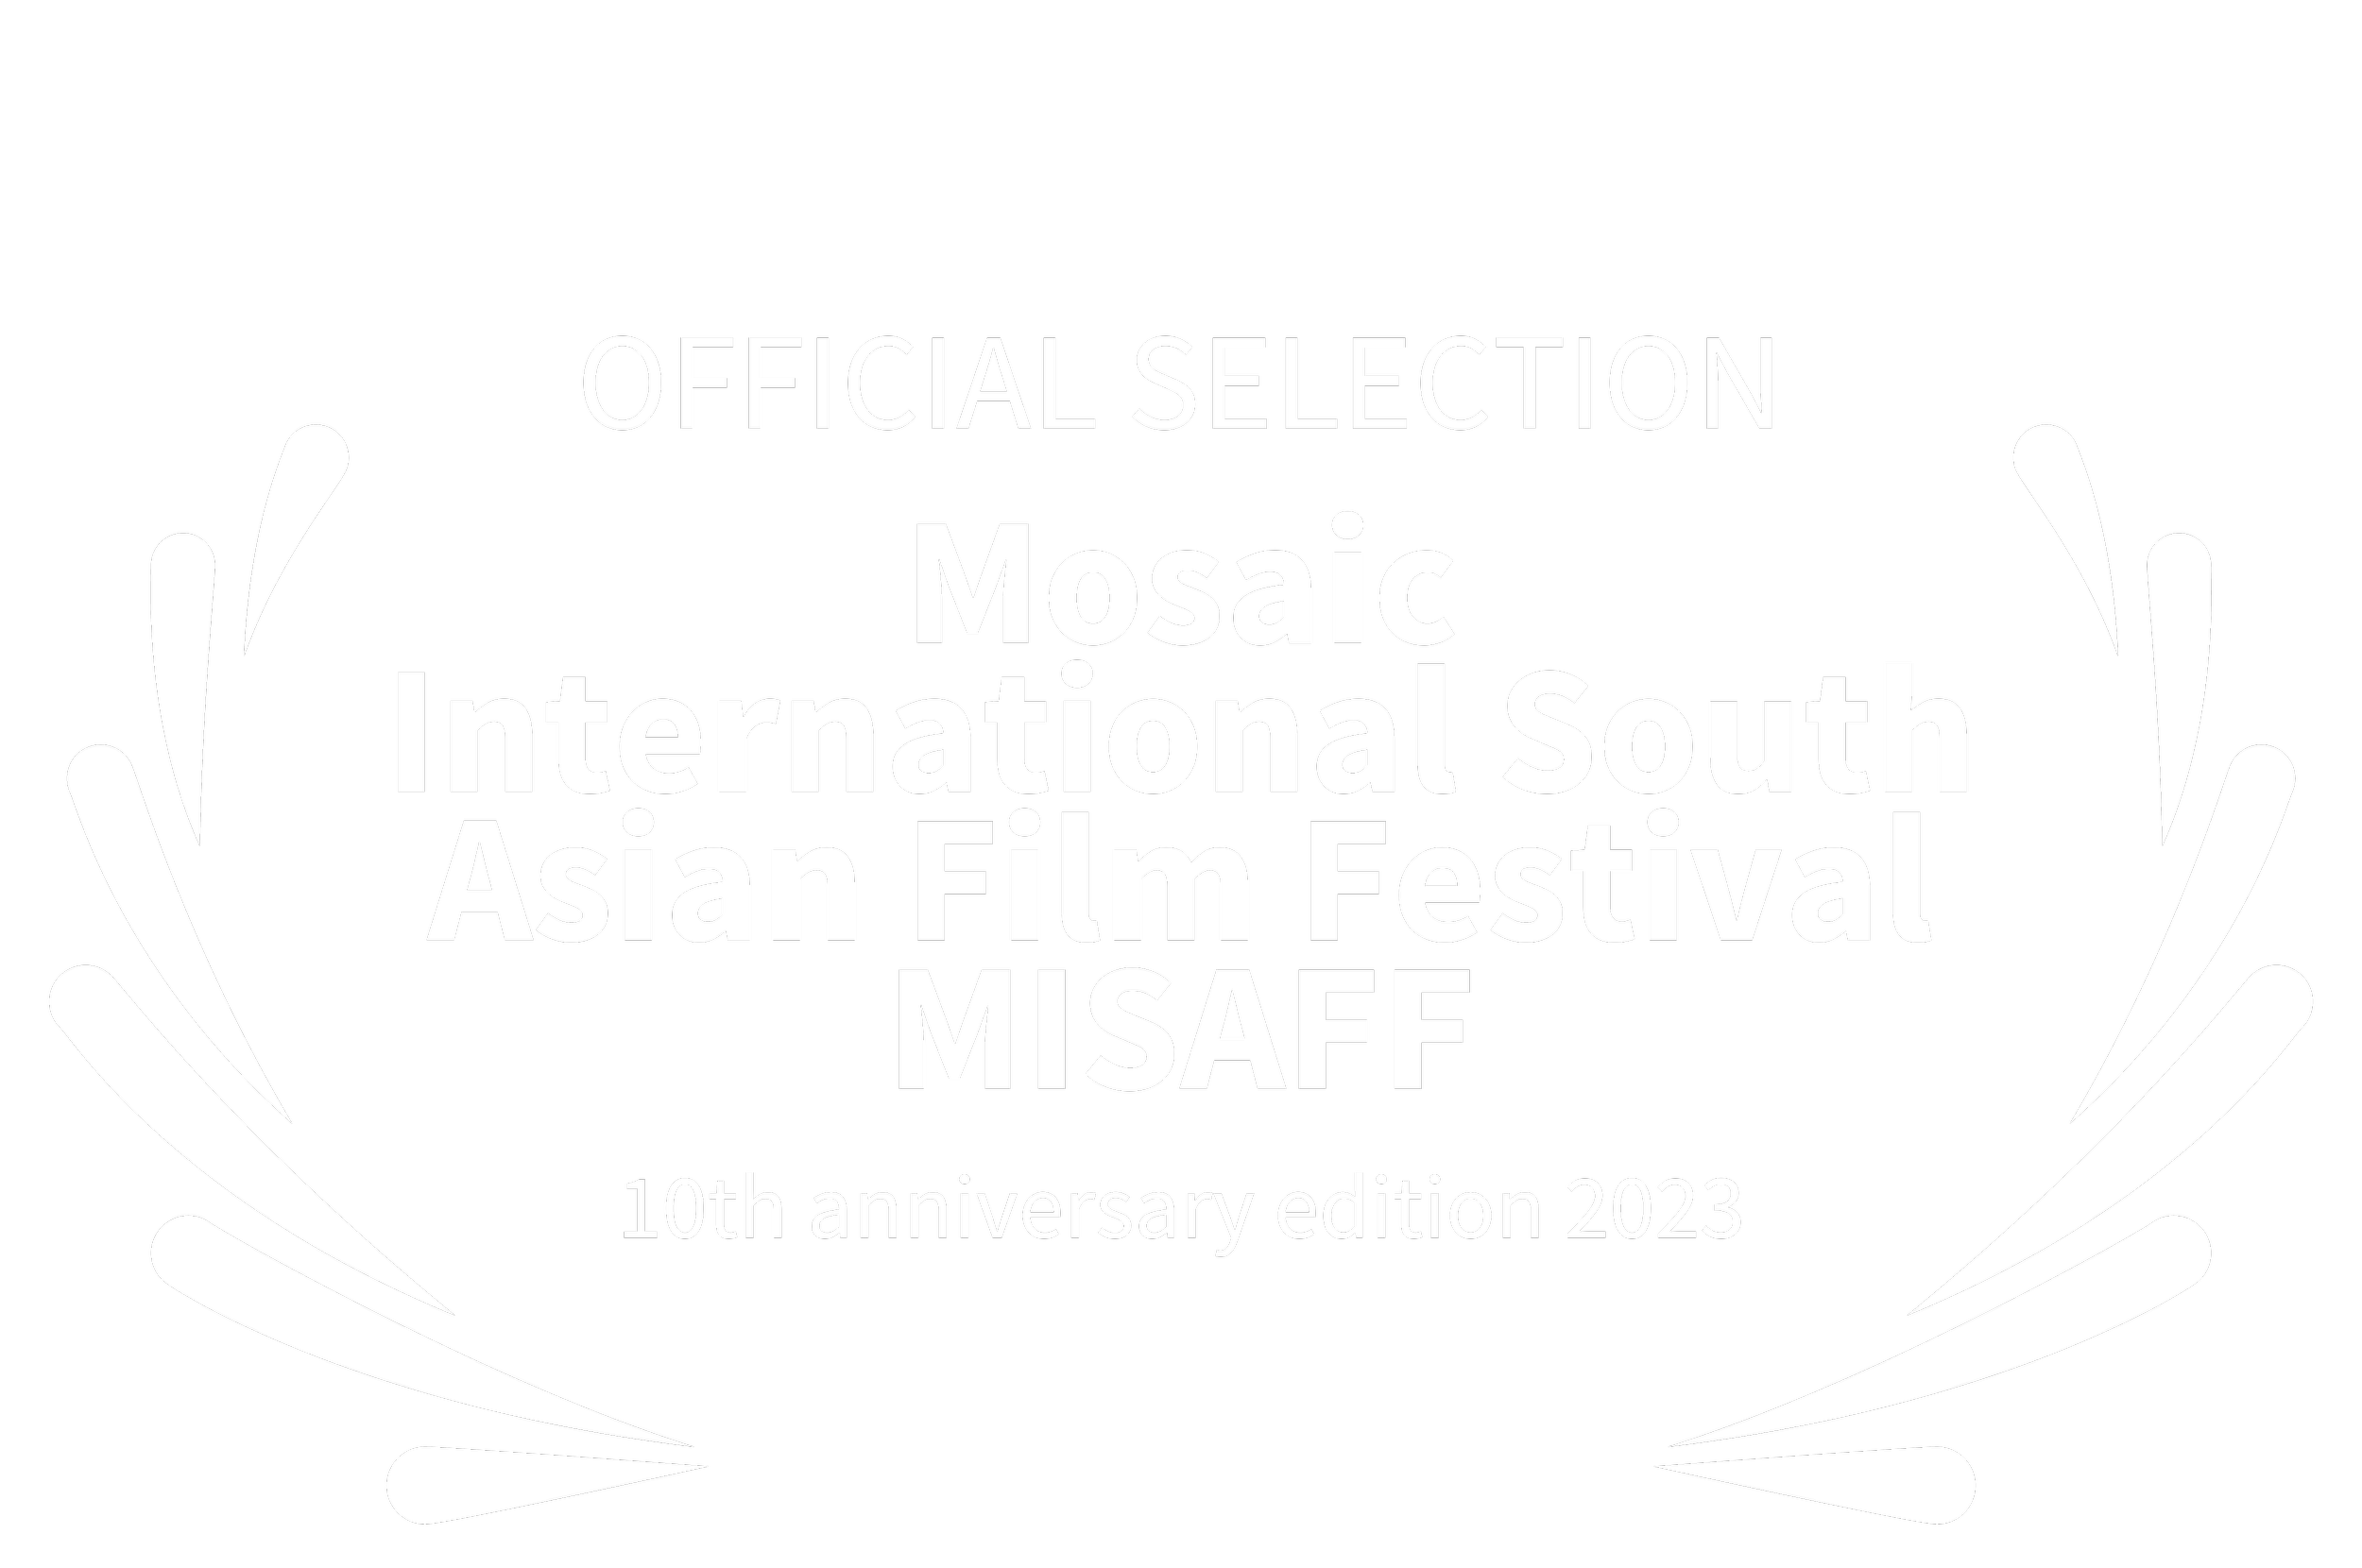 OFFICIALSELECTION-MosaicInternationalSouthAsianFilmFestivalMISAFF-10thanniversaryedition2023-2.png